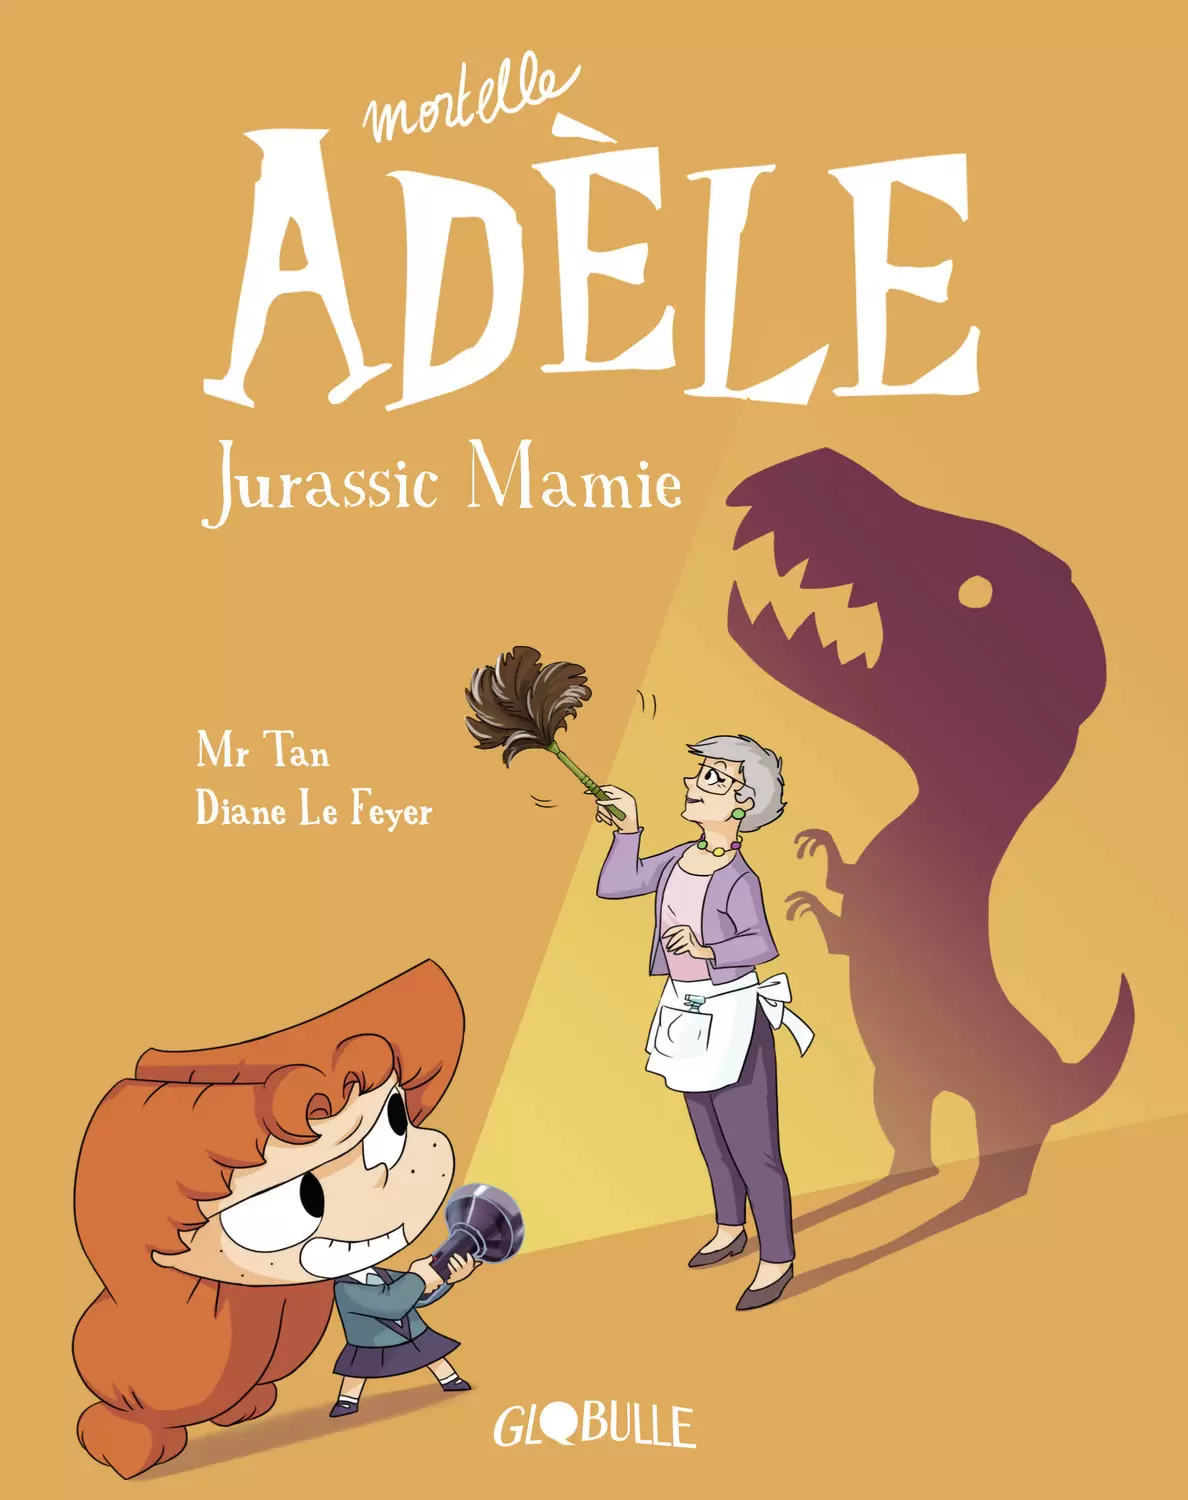 Mortelle Adèle - Jurassic Mamie